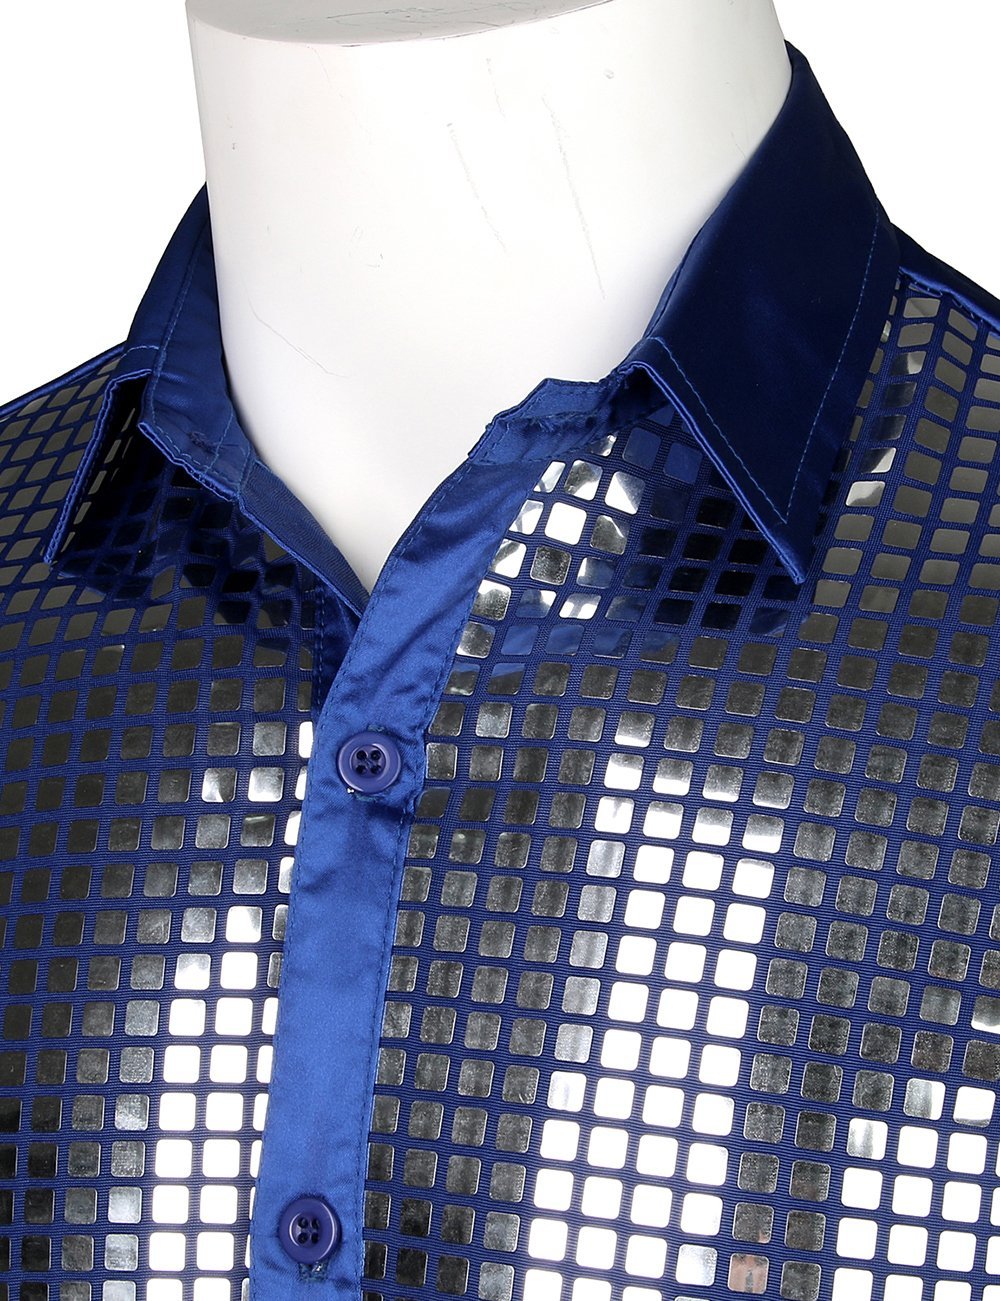 JOGAL Mens Dress Shirt Silver Sequins Short Sleeve Button Down 70s Disco Shirt Party Costume